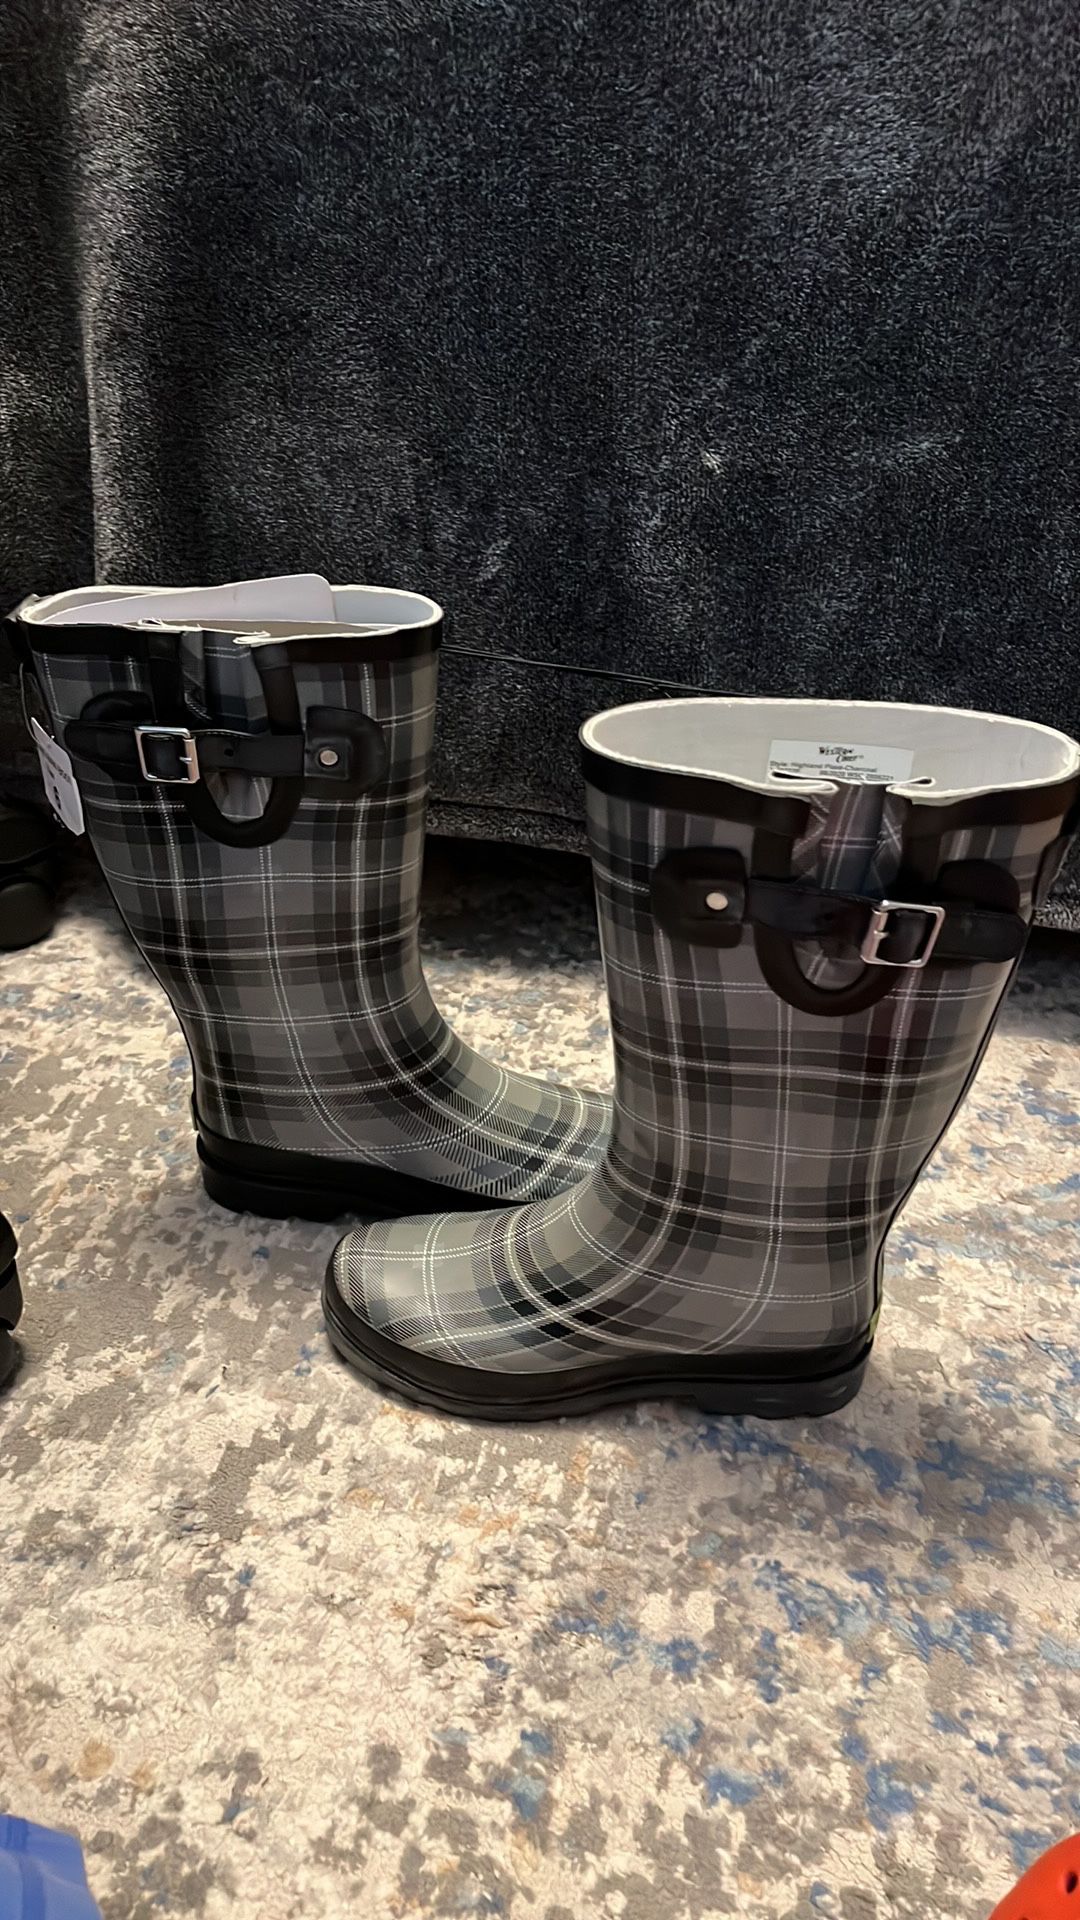 New Rain Boots Black And Grey